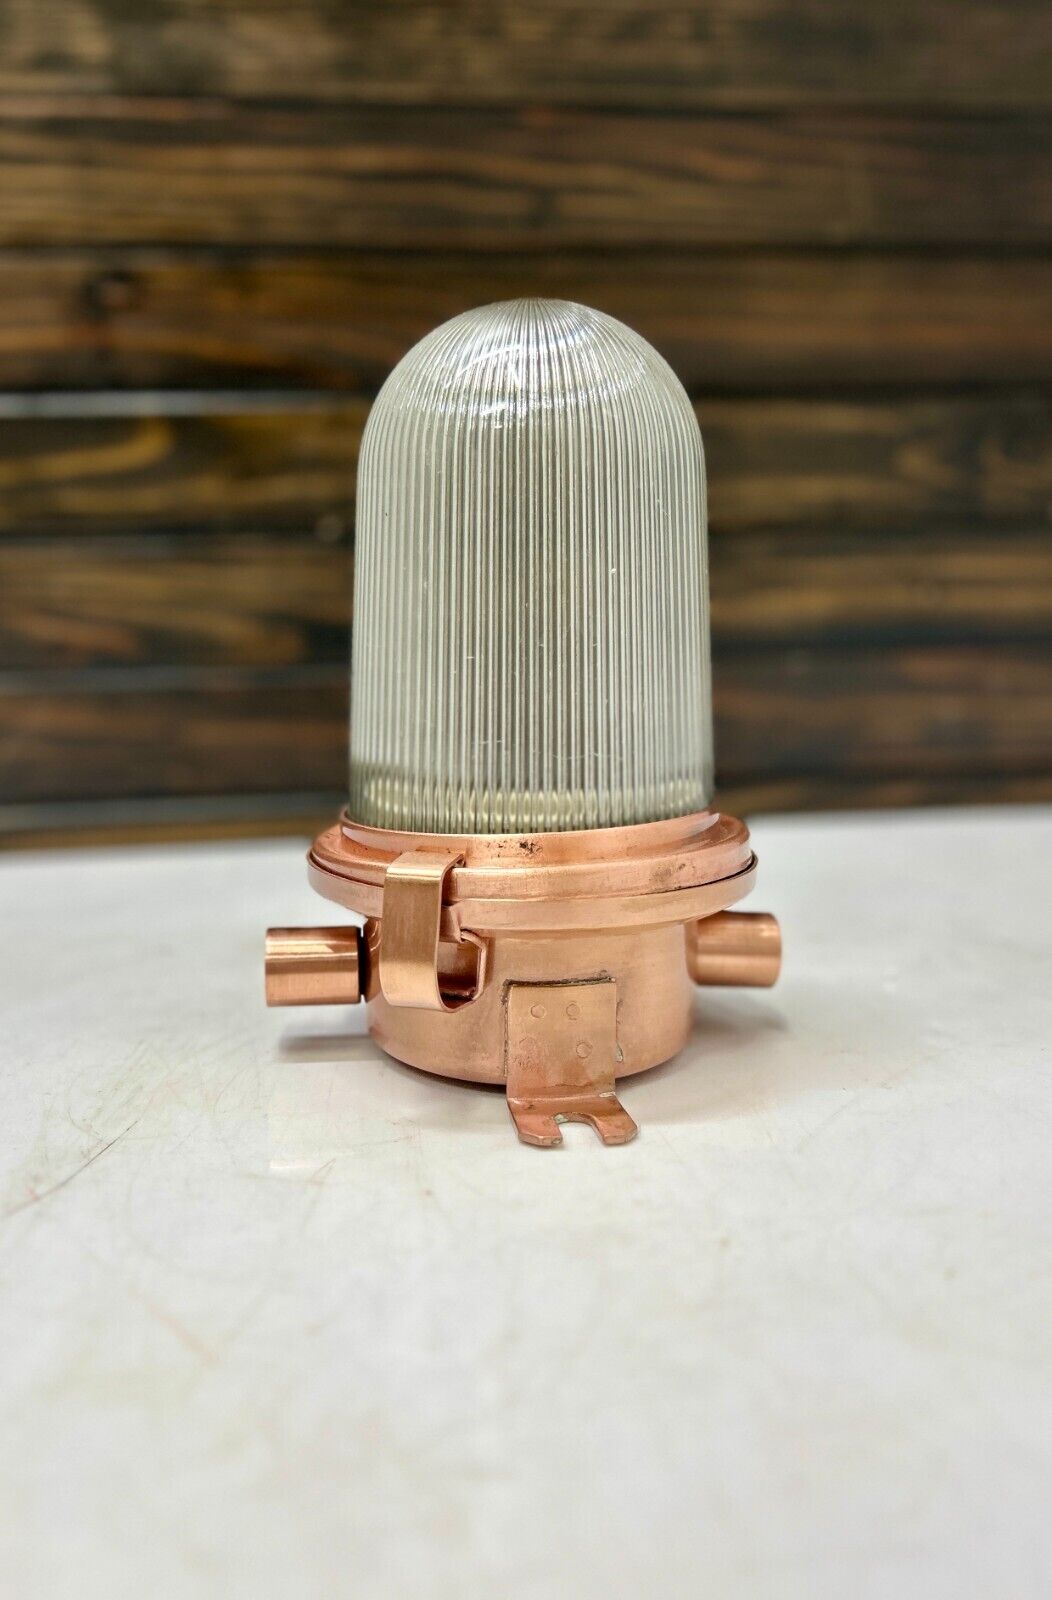 Authentic Original Marine Iron Metal Old Vintage Bulkhead Light - Copper Coating